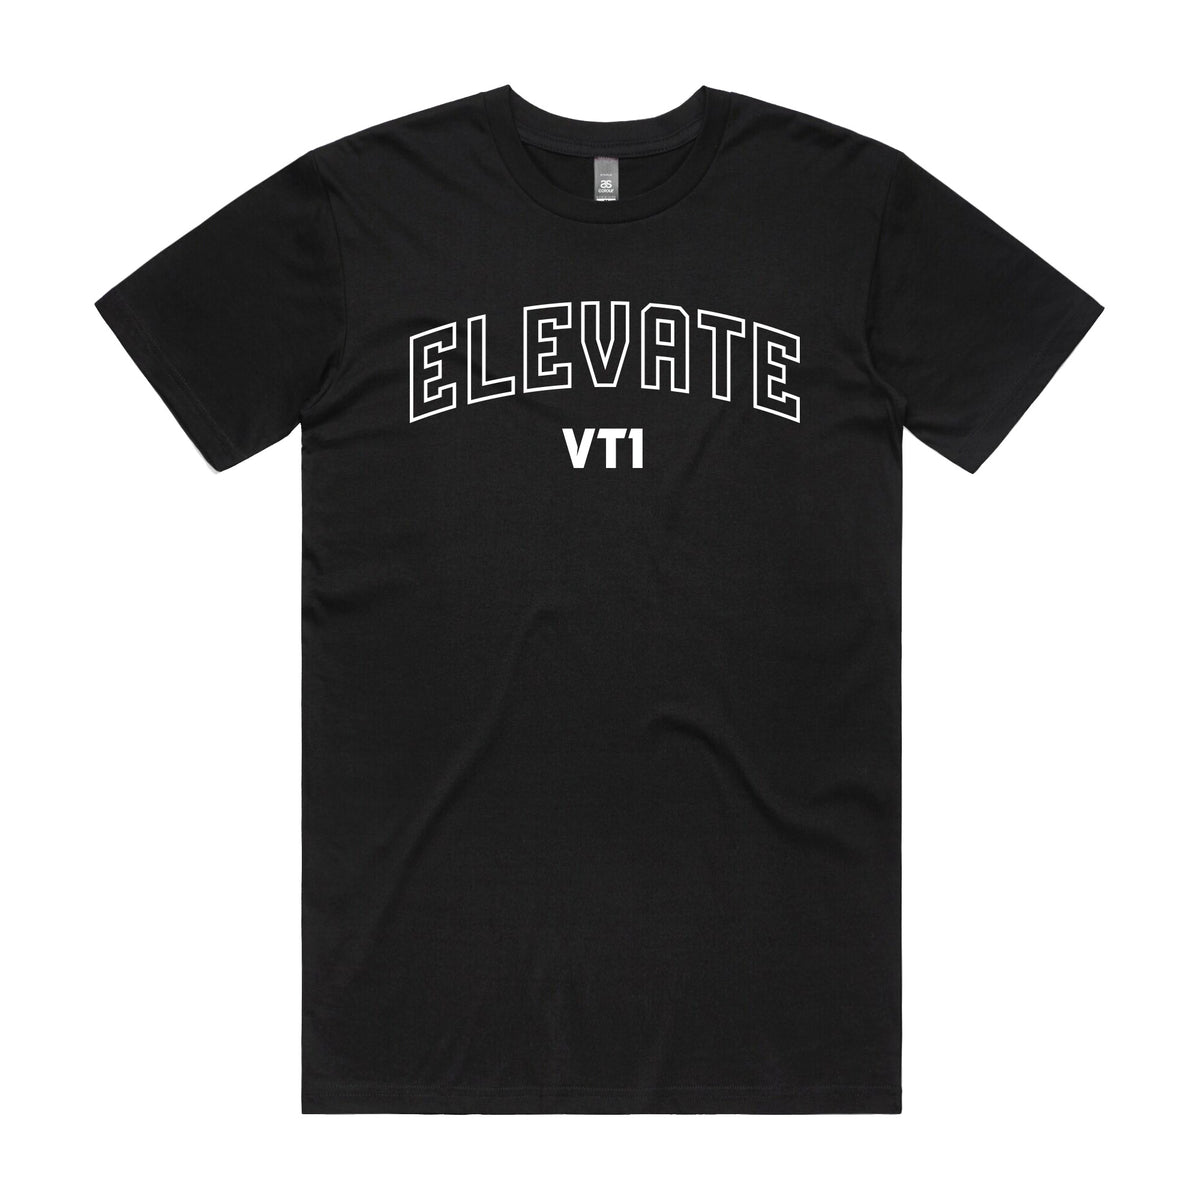 VT1 Elevate T-Shirt - Adults